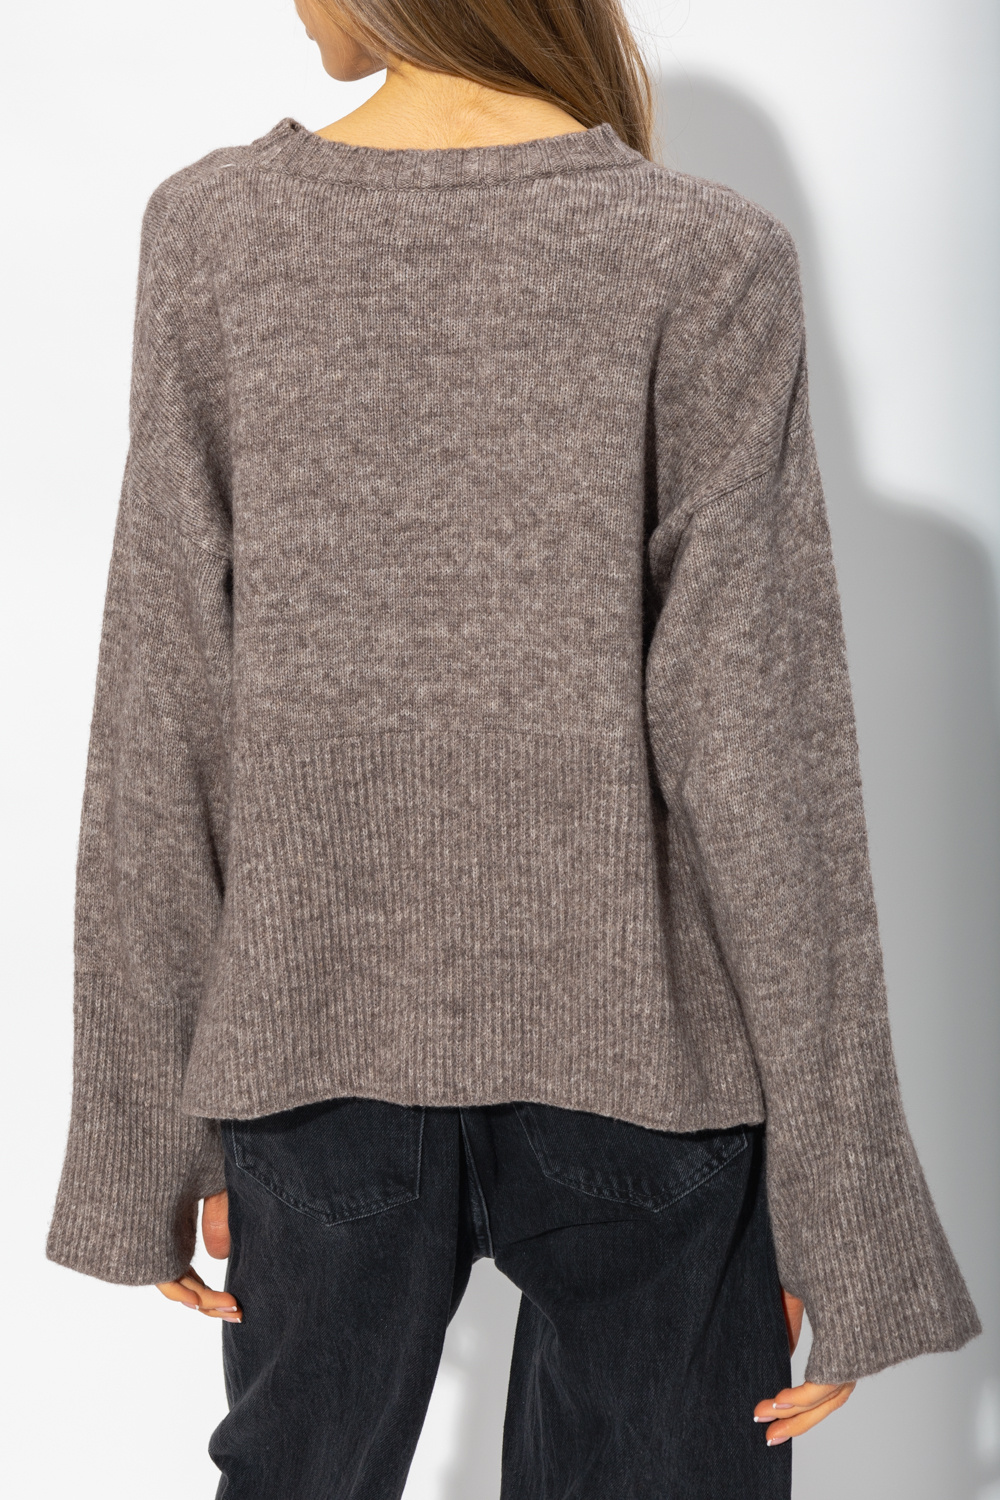 Birgitte Herskind ‘Andres’ slogan sweater with vents